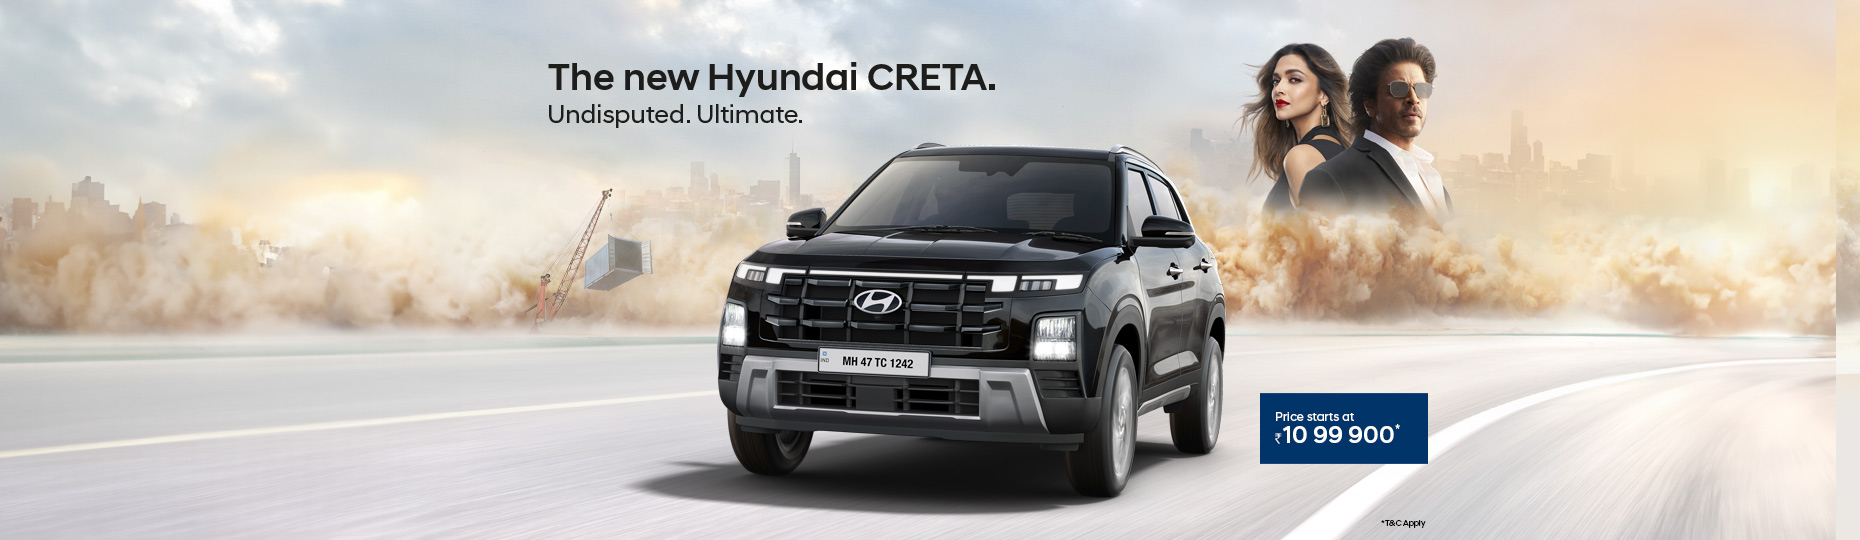 The new Hyundai CRETA